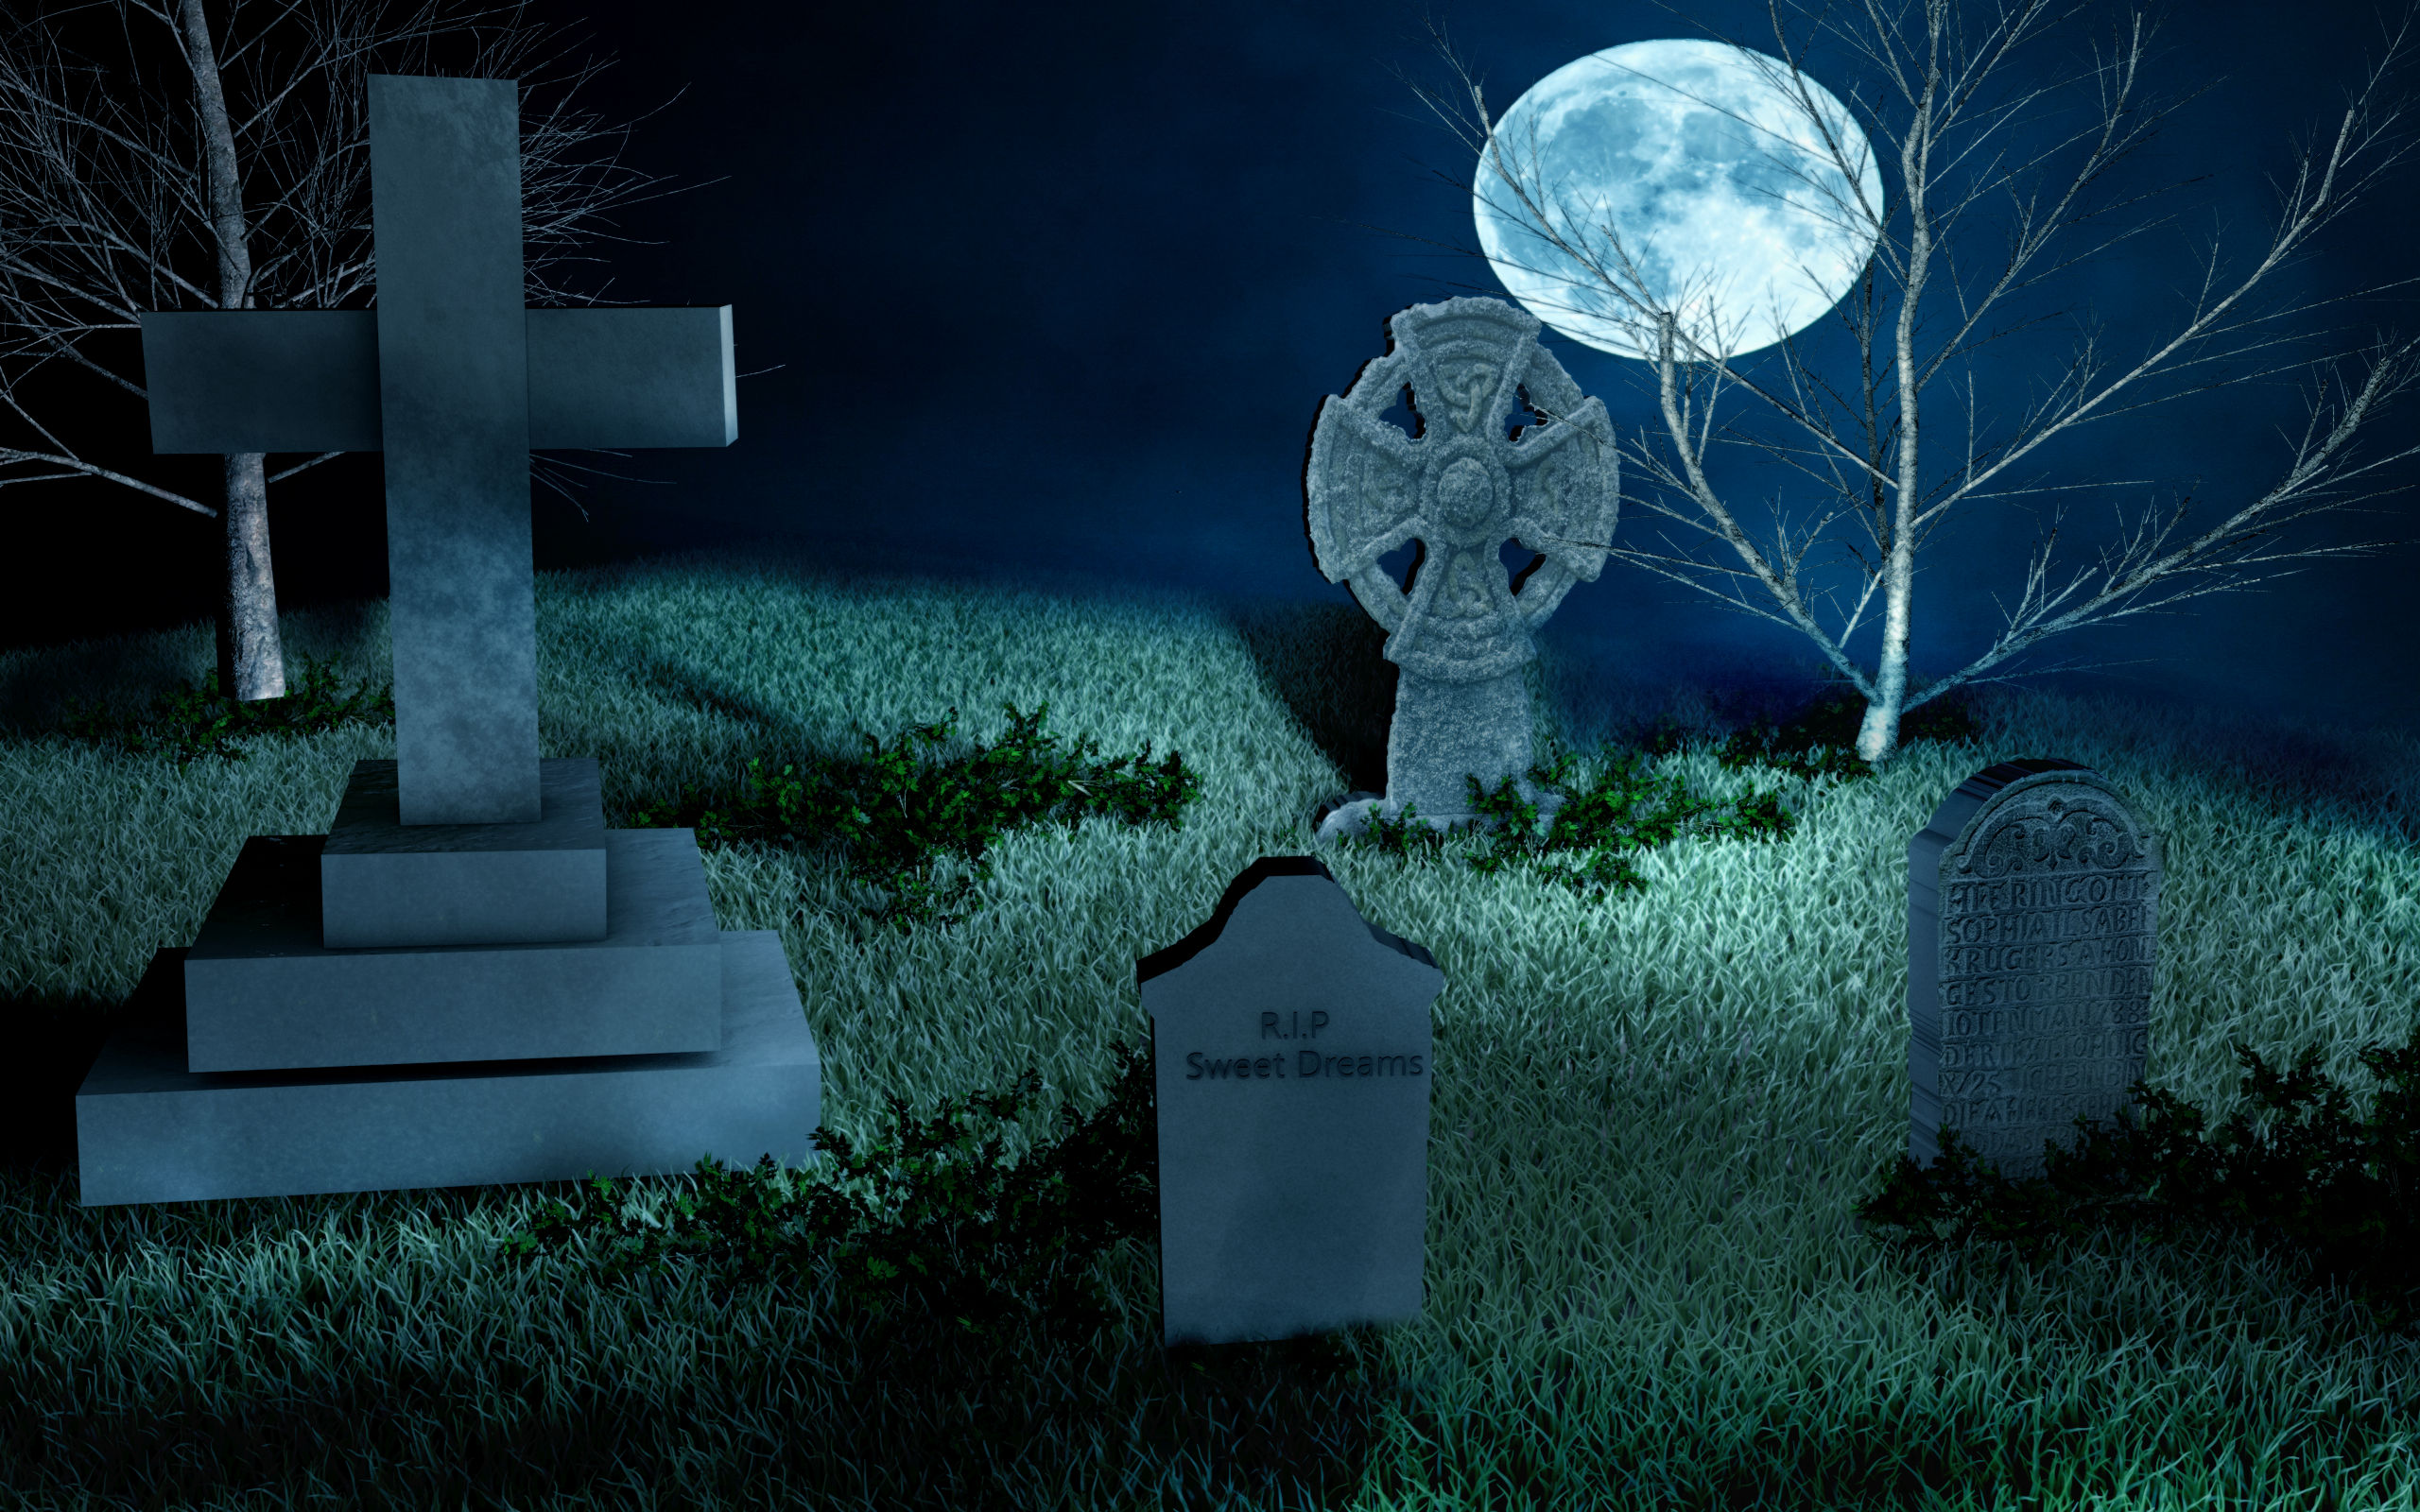 Cemetery at Night, Calm, Cemetery, Dead, Death, HQ Photo